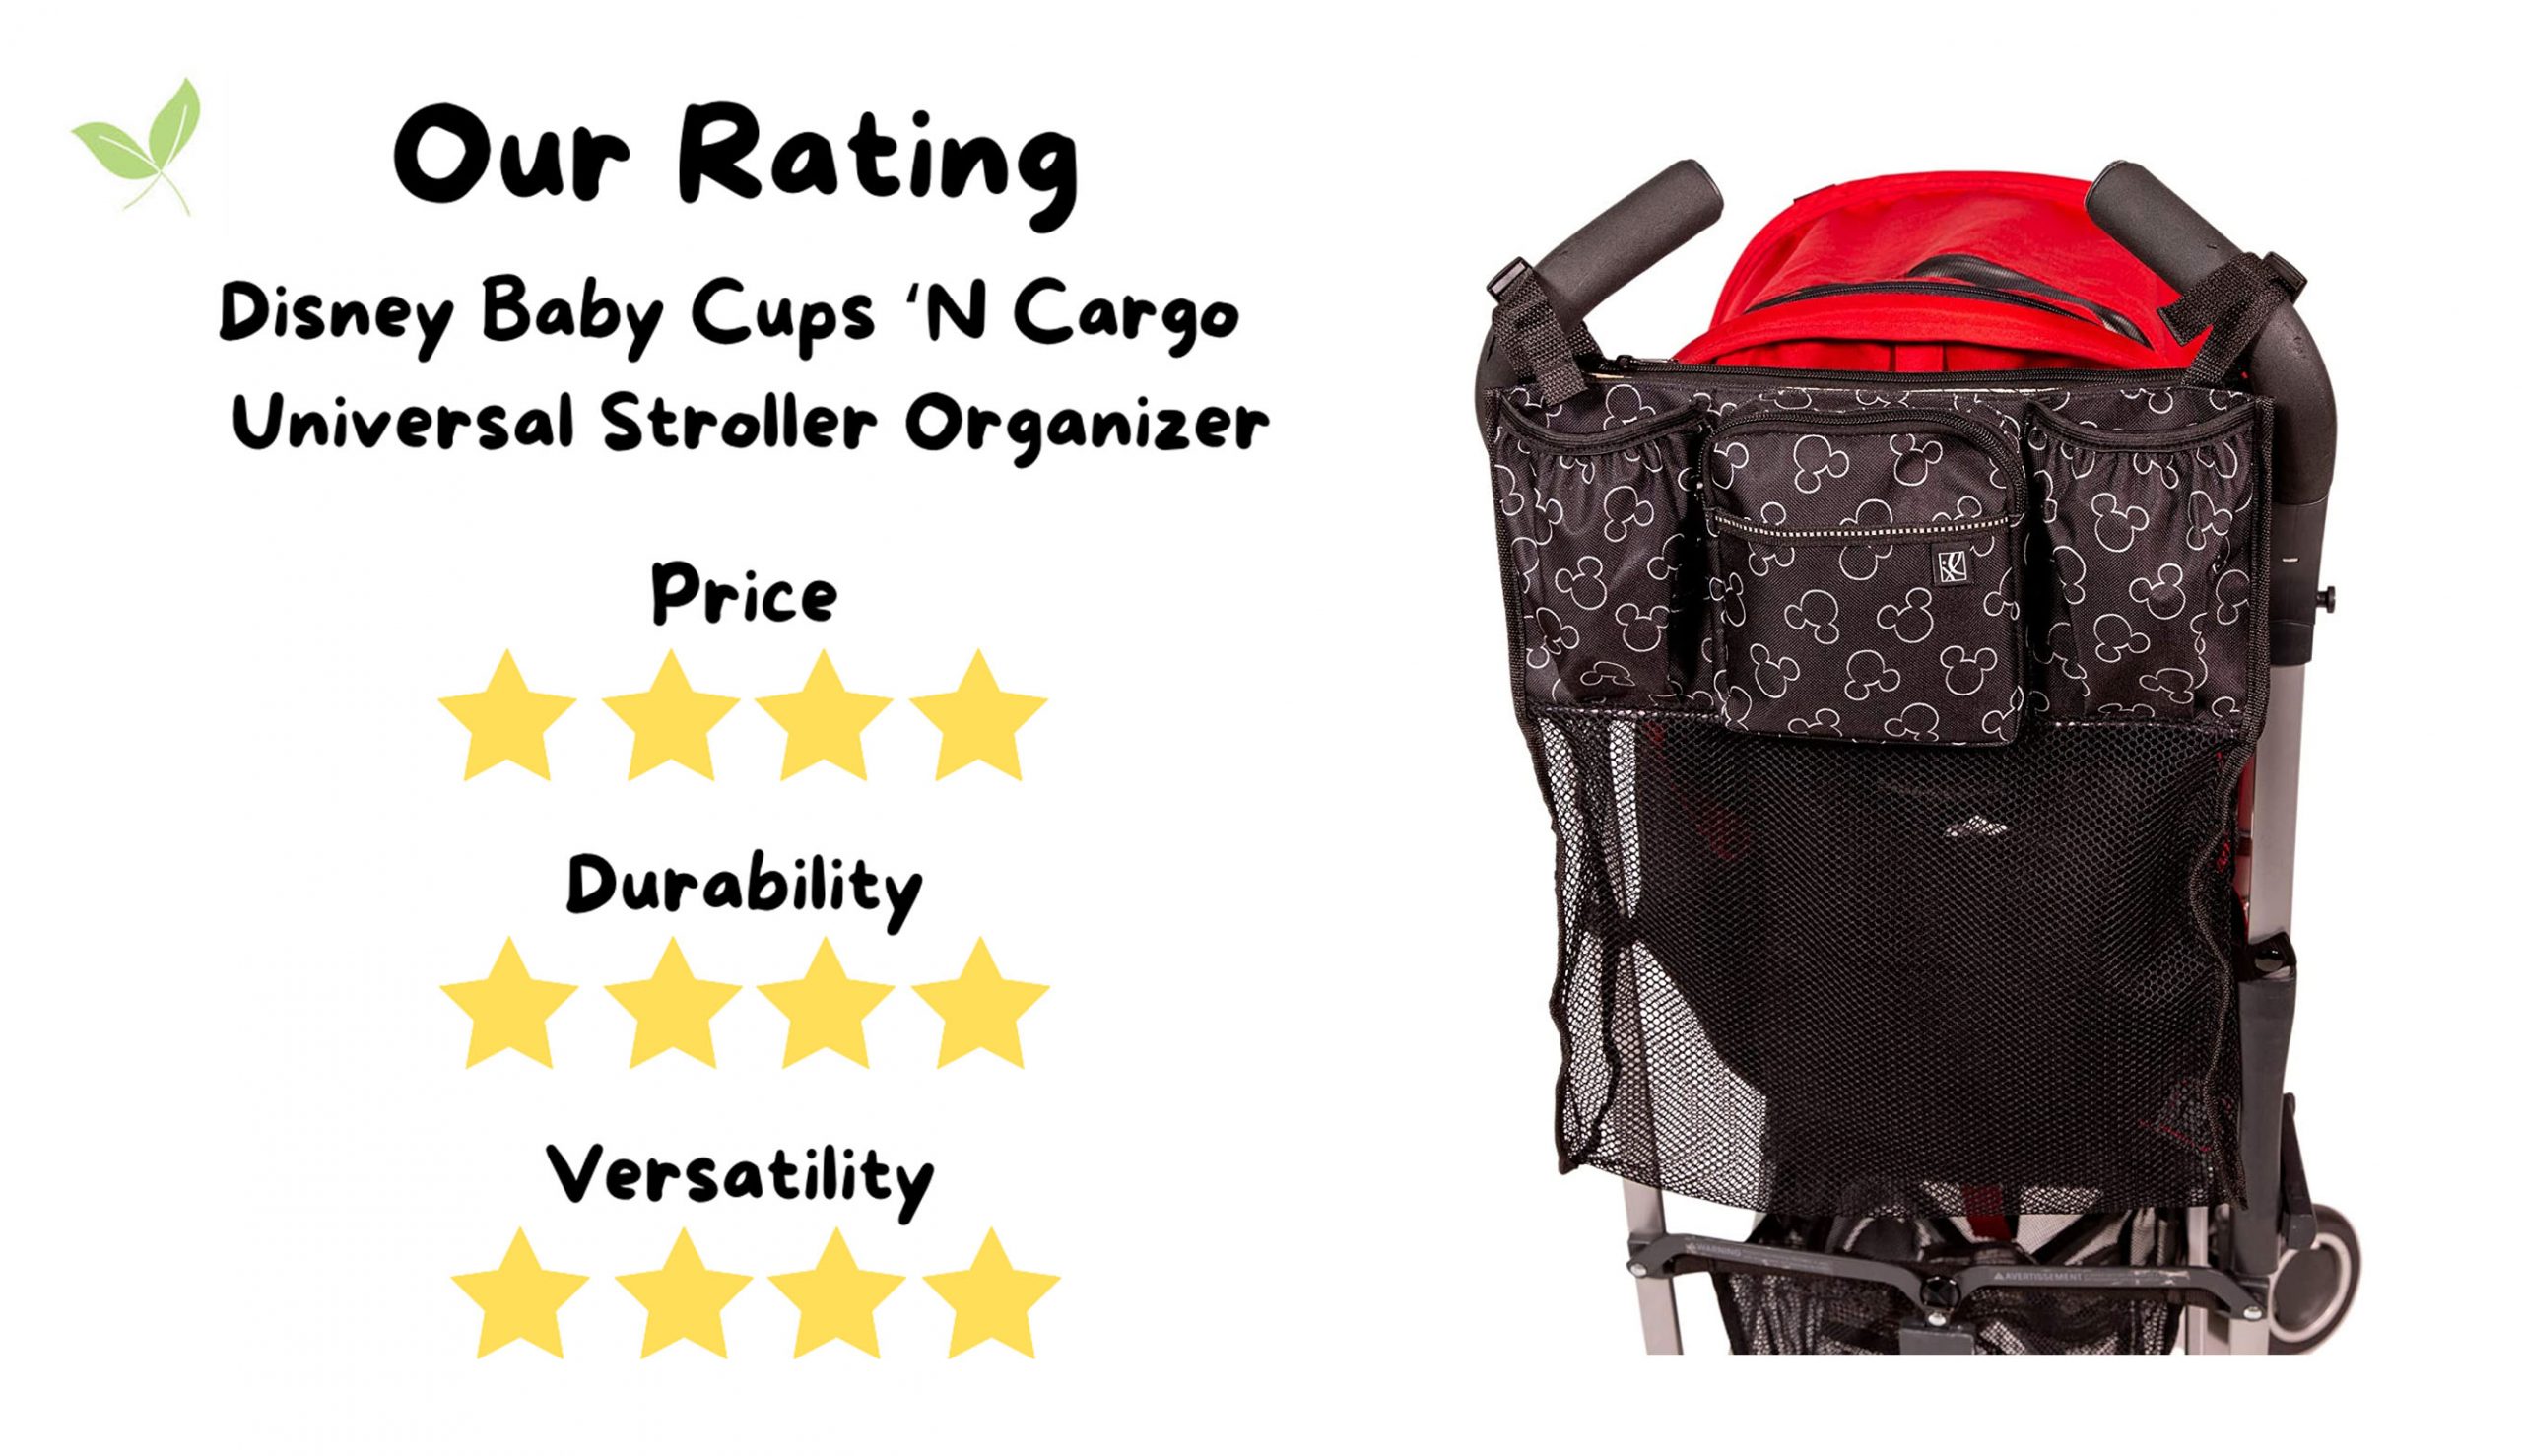 Disney Baby Cups ‘N Cargo Universal Stroller Organizer